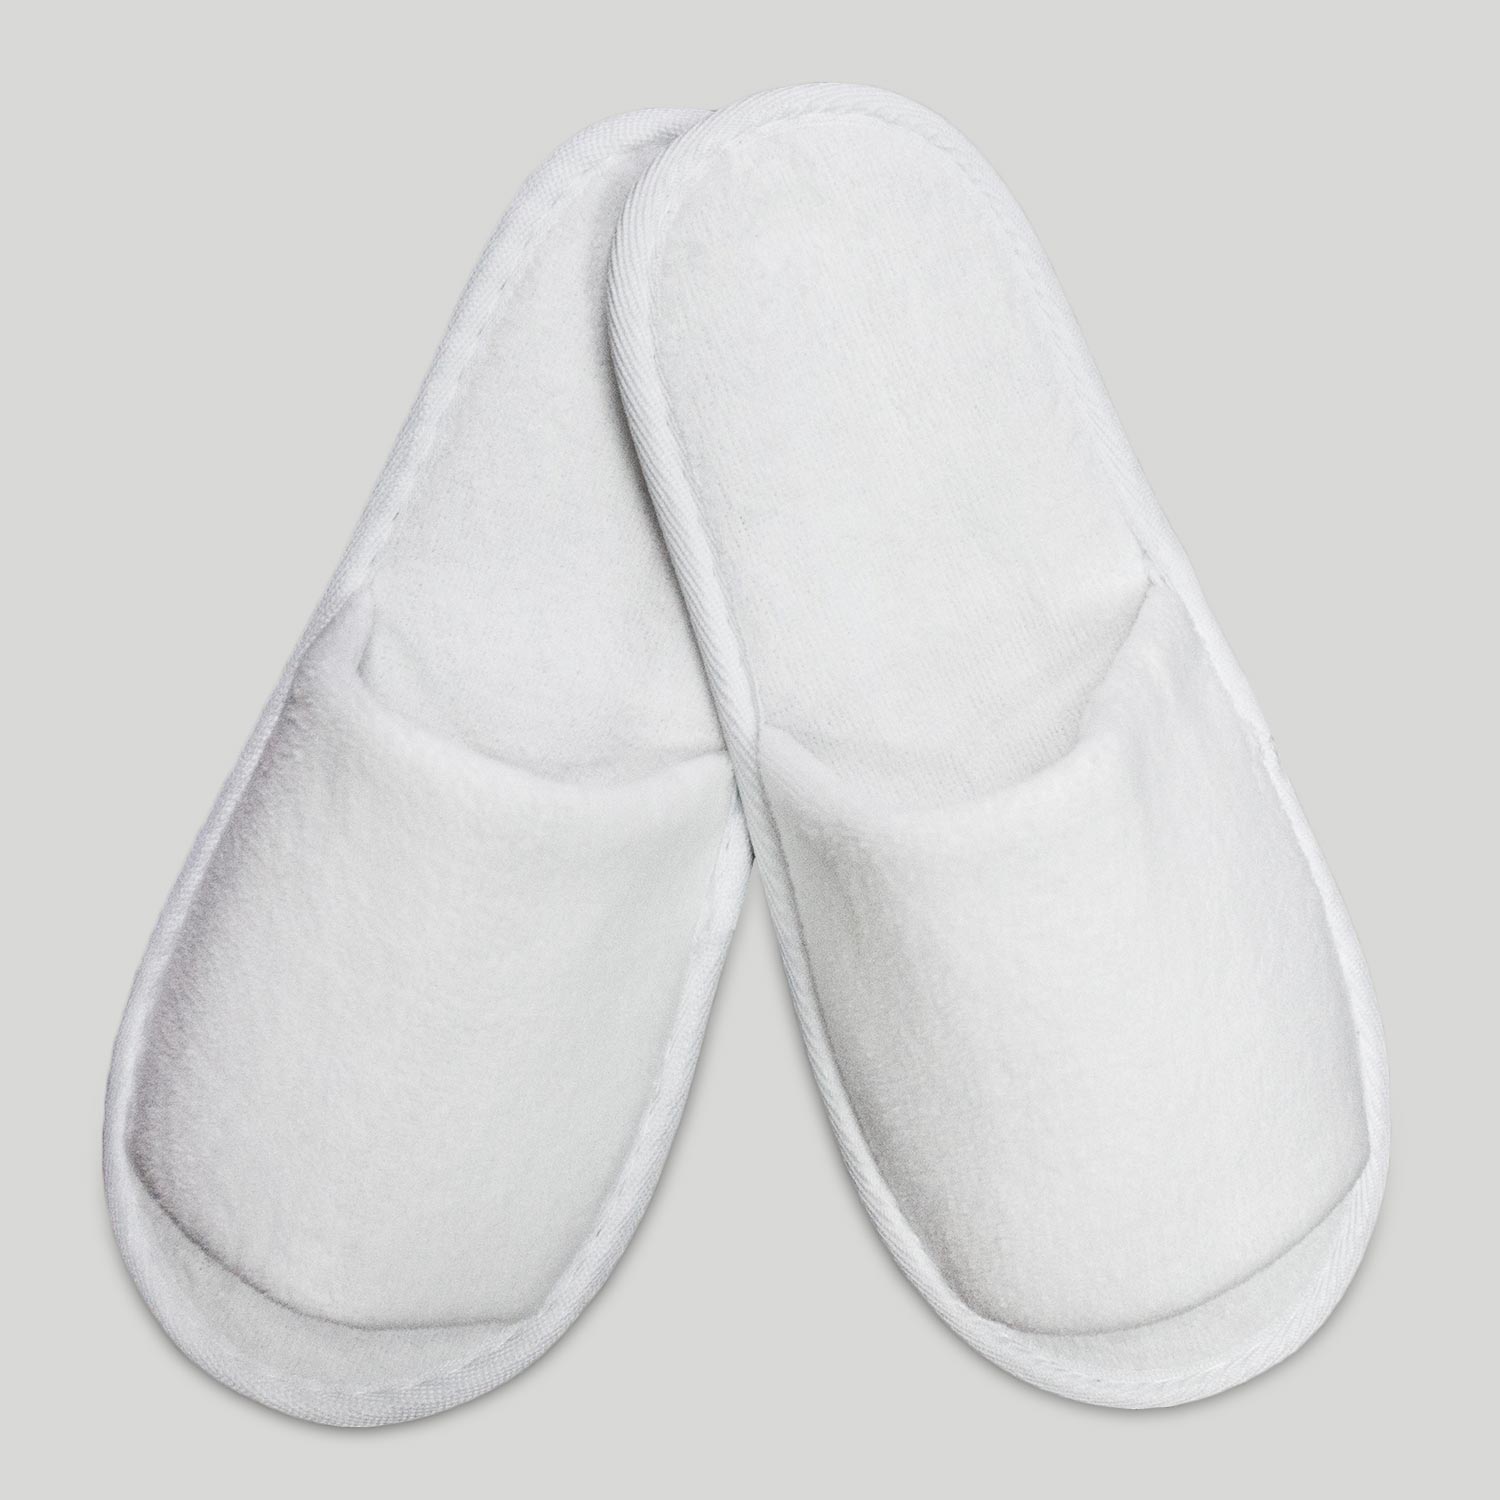 childrens white slippers